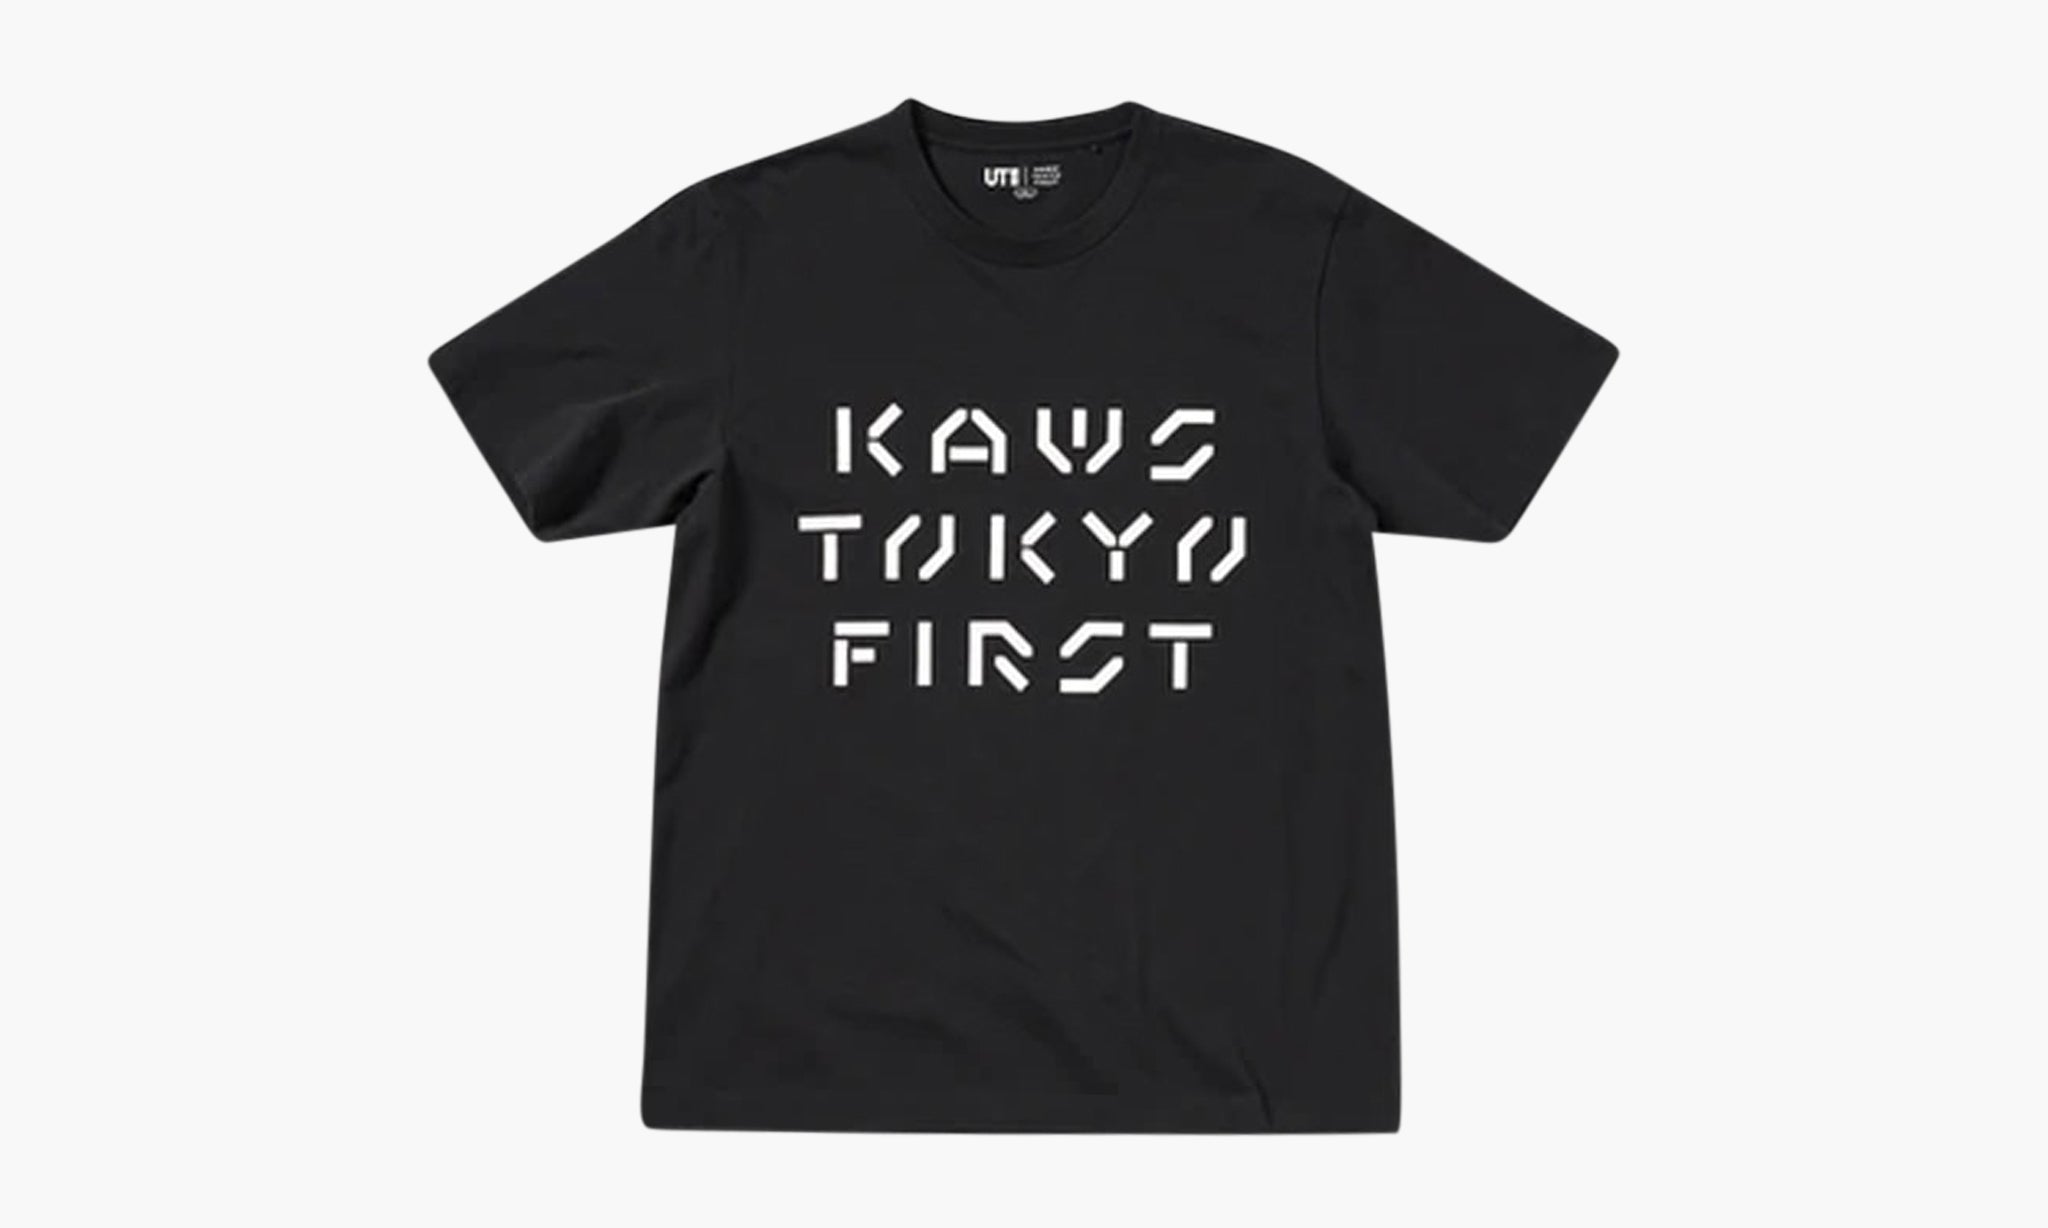 KAWS Tokyo First Tee Black